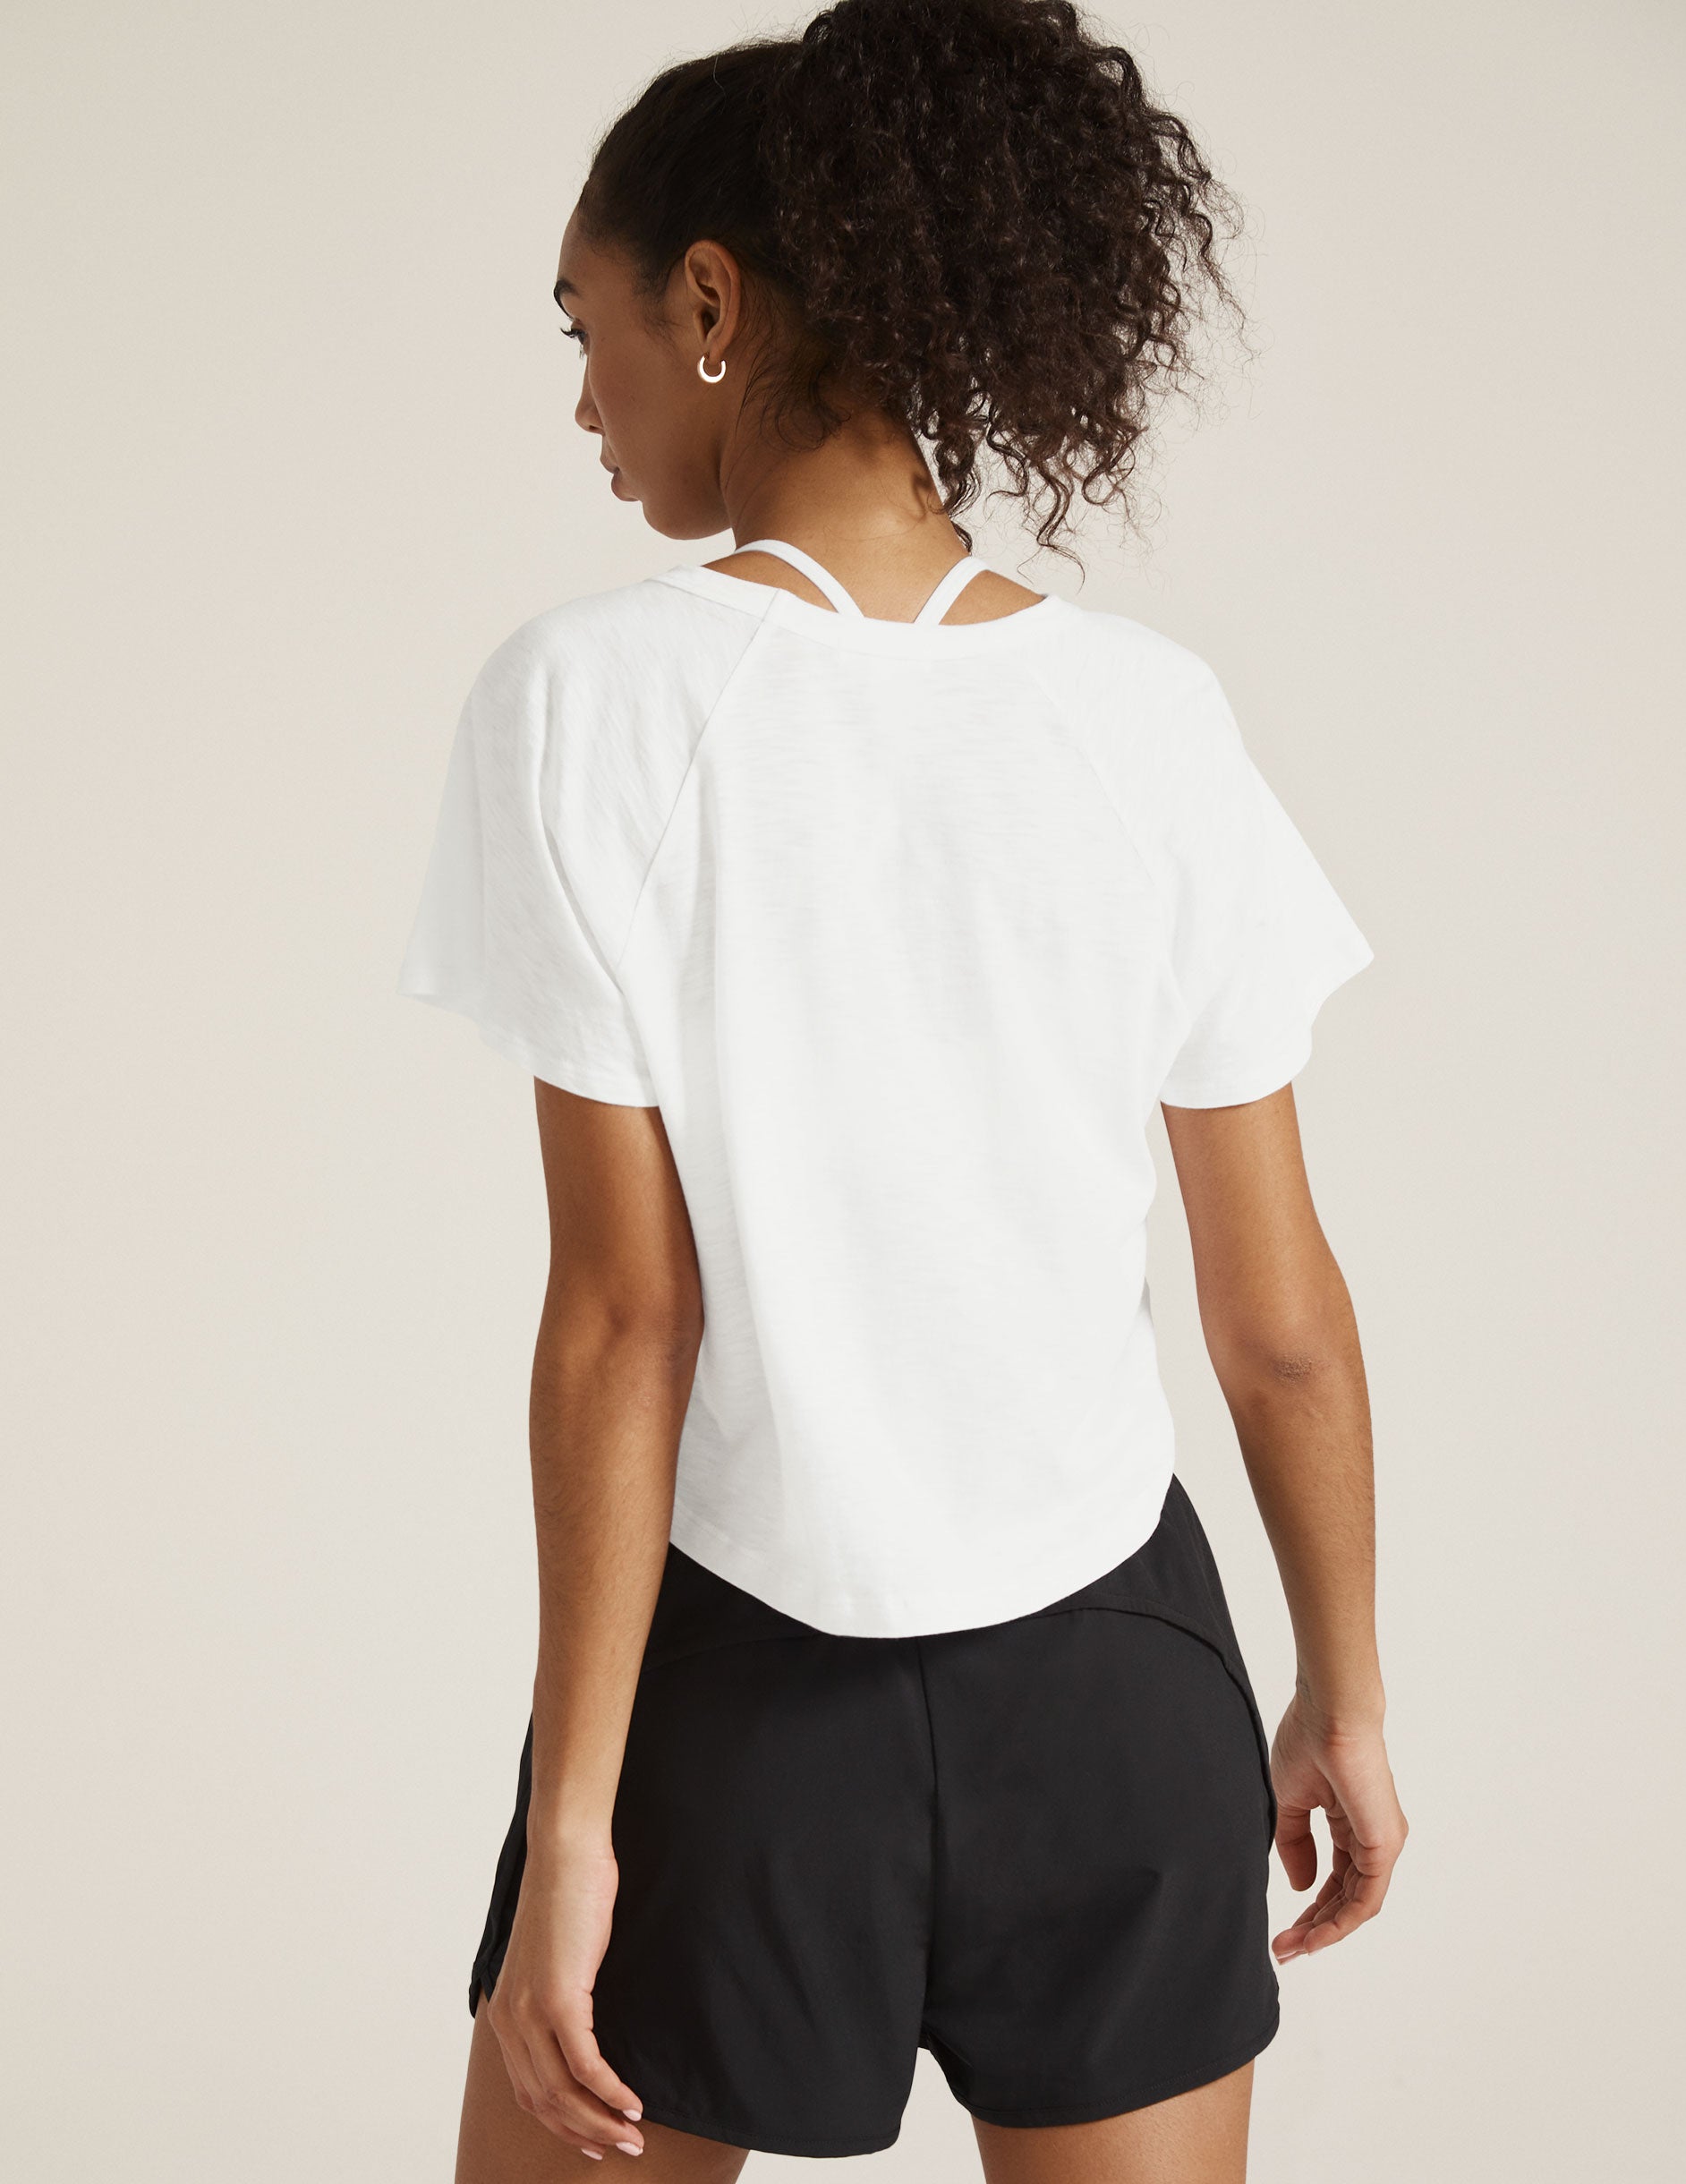 Cara Cloud - Sport Short-Sleeve T-Shirt / Camisole Top / Yoga